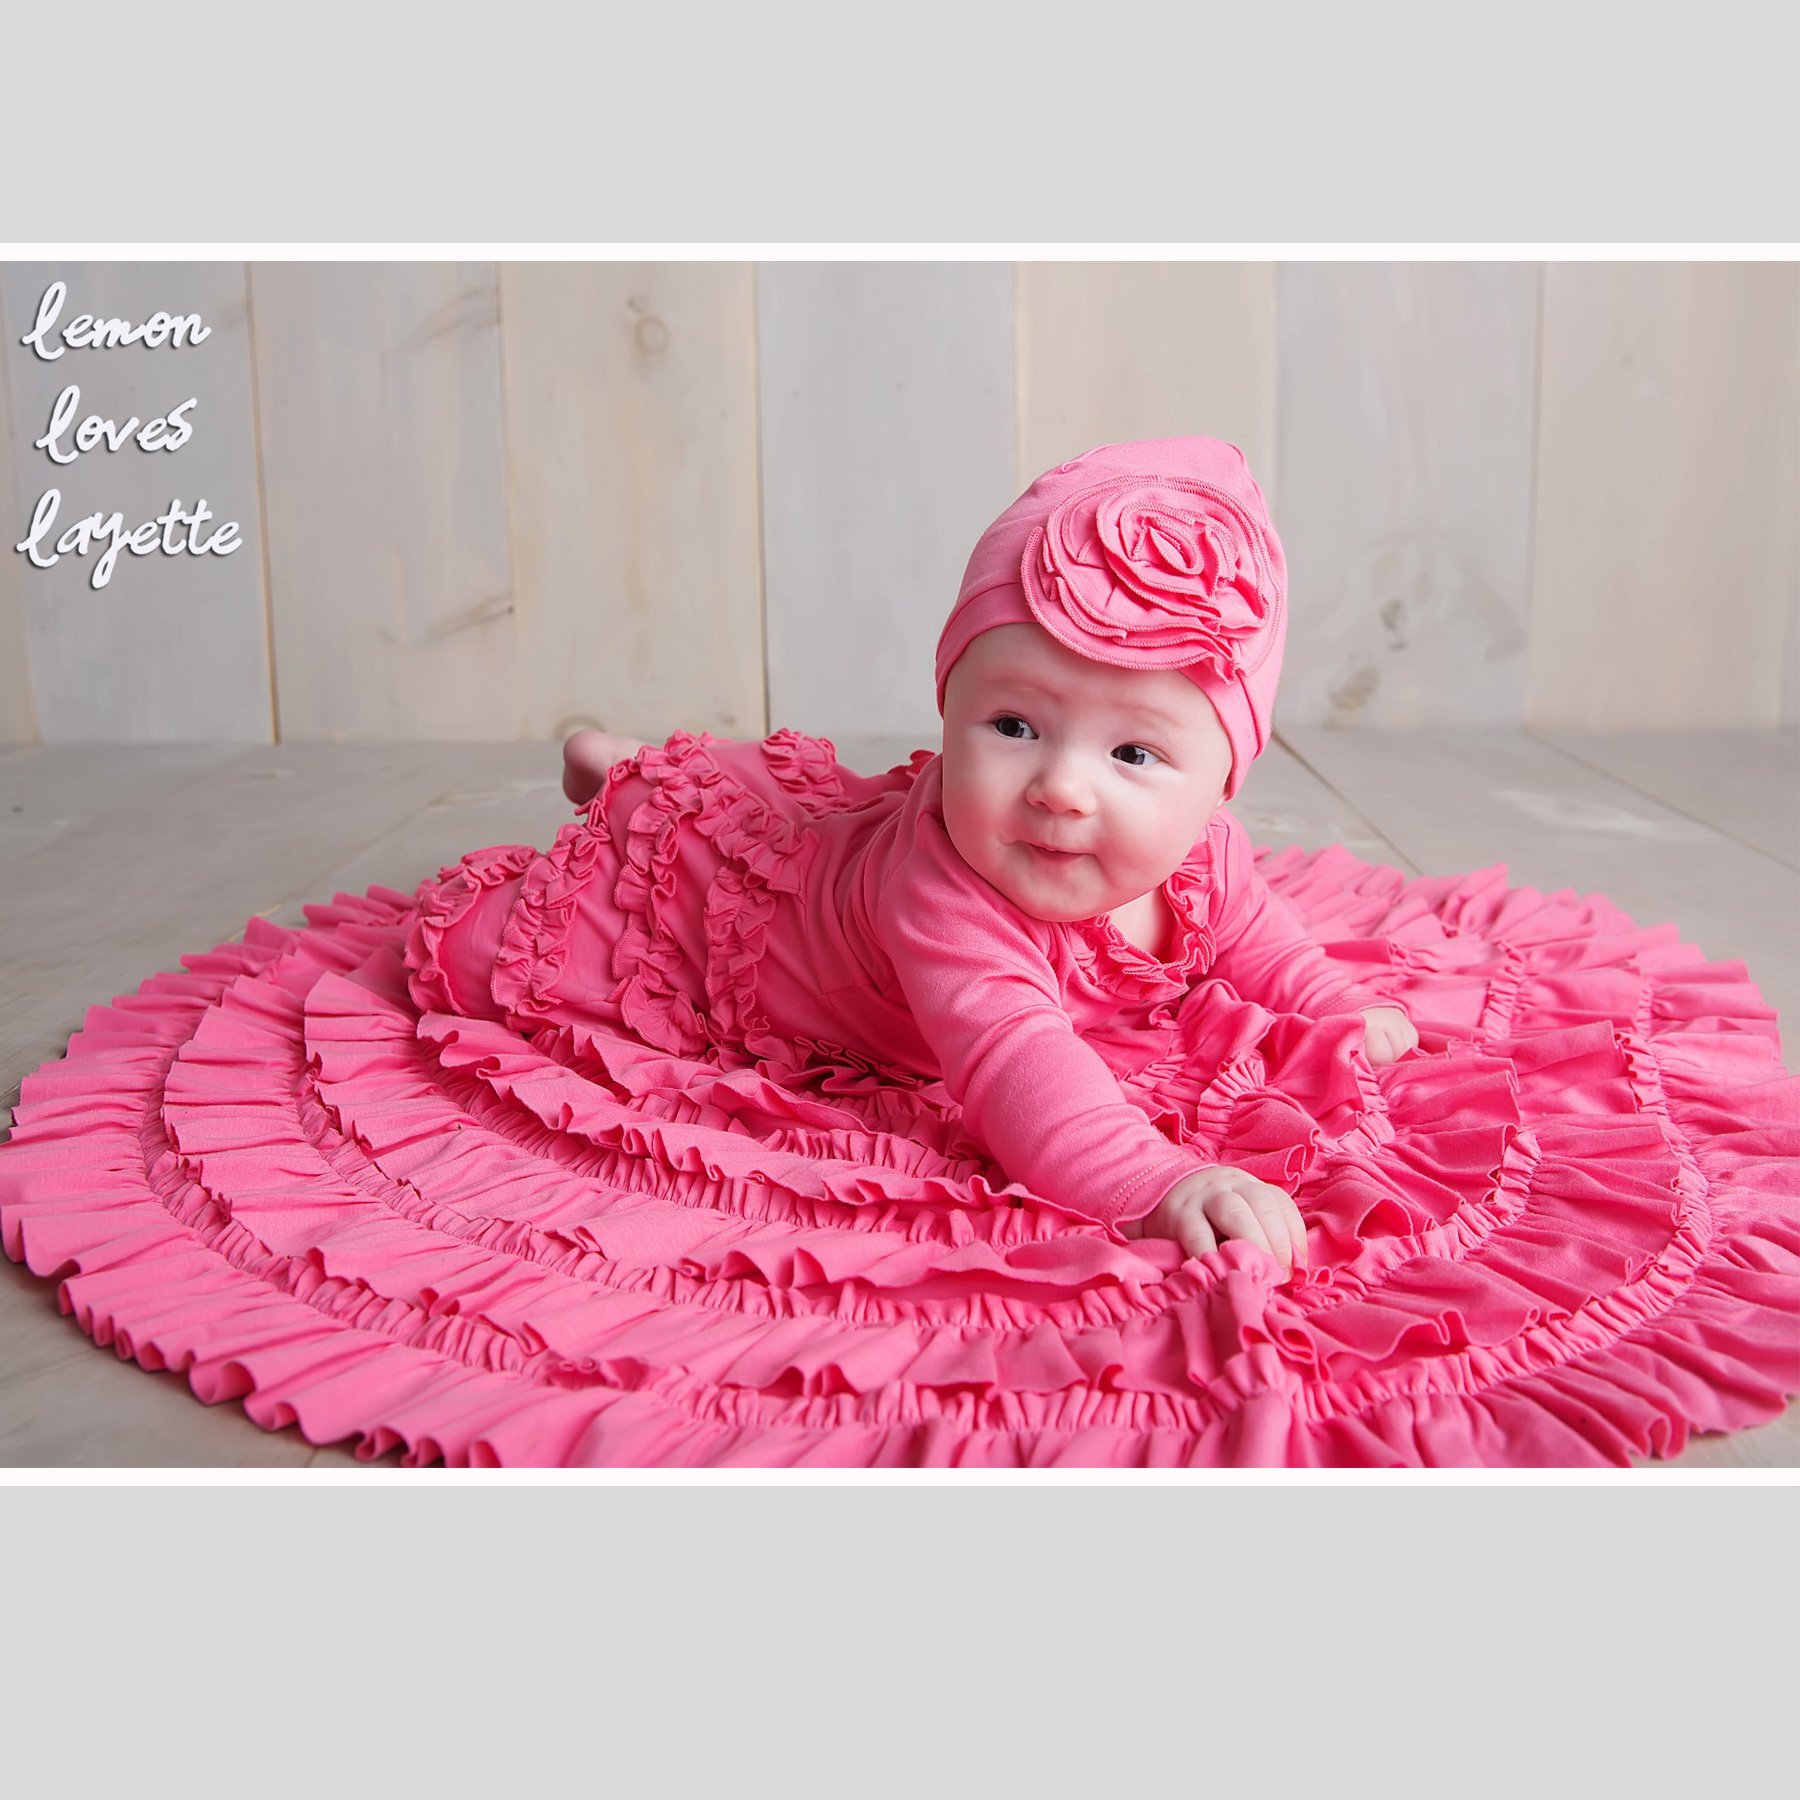 Lemon Loves Layette "Wrap" for Newborn and Baby Girls in Pink Lemonade